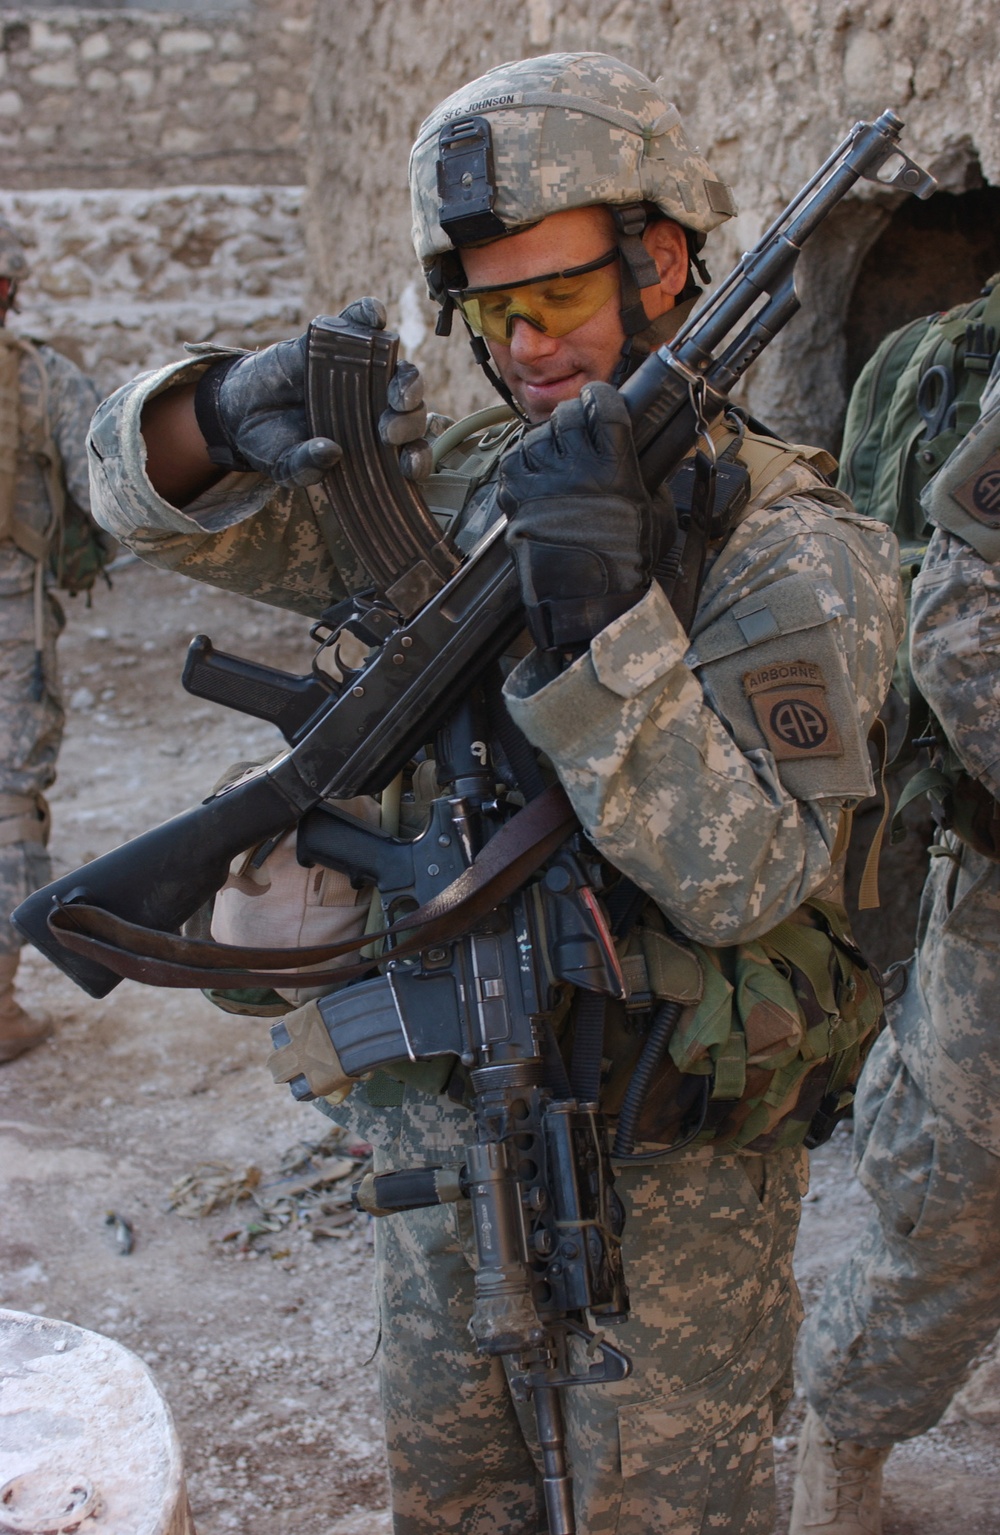 Sgt. 1st Class Johnson places a magazine into an AK-47